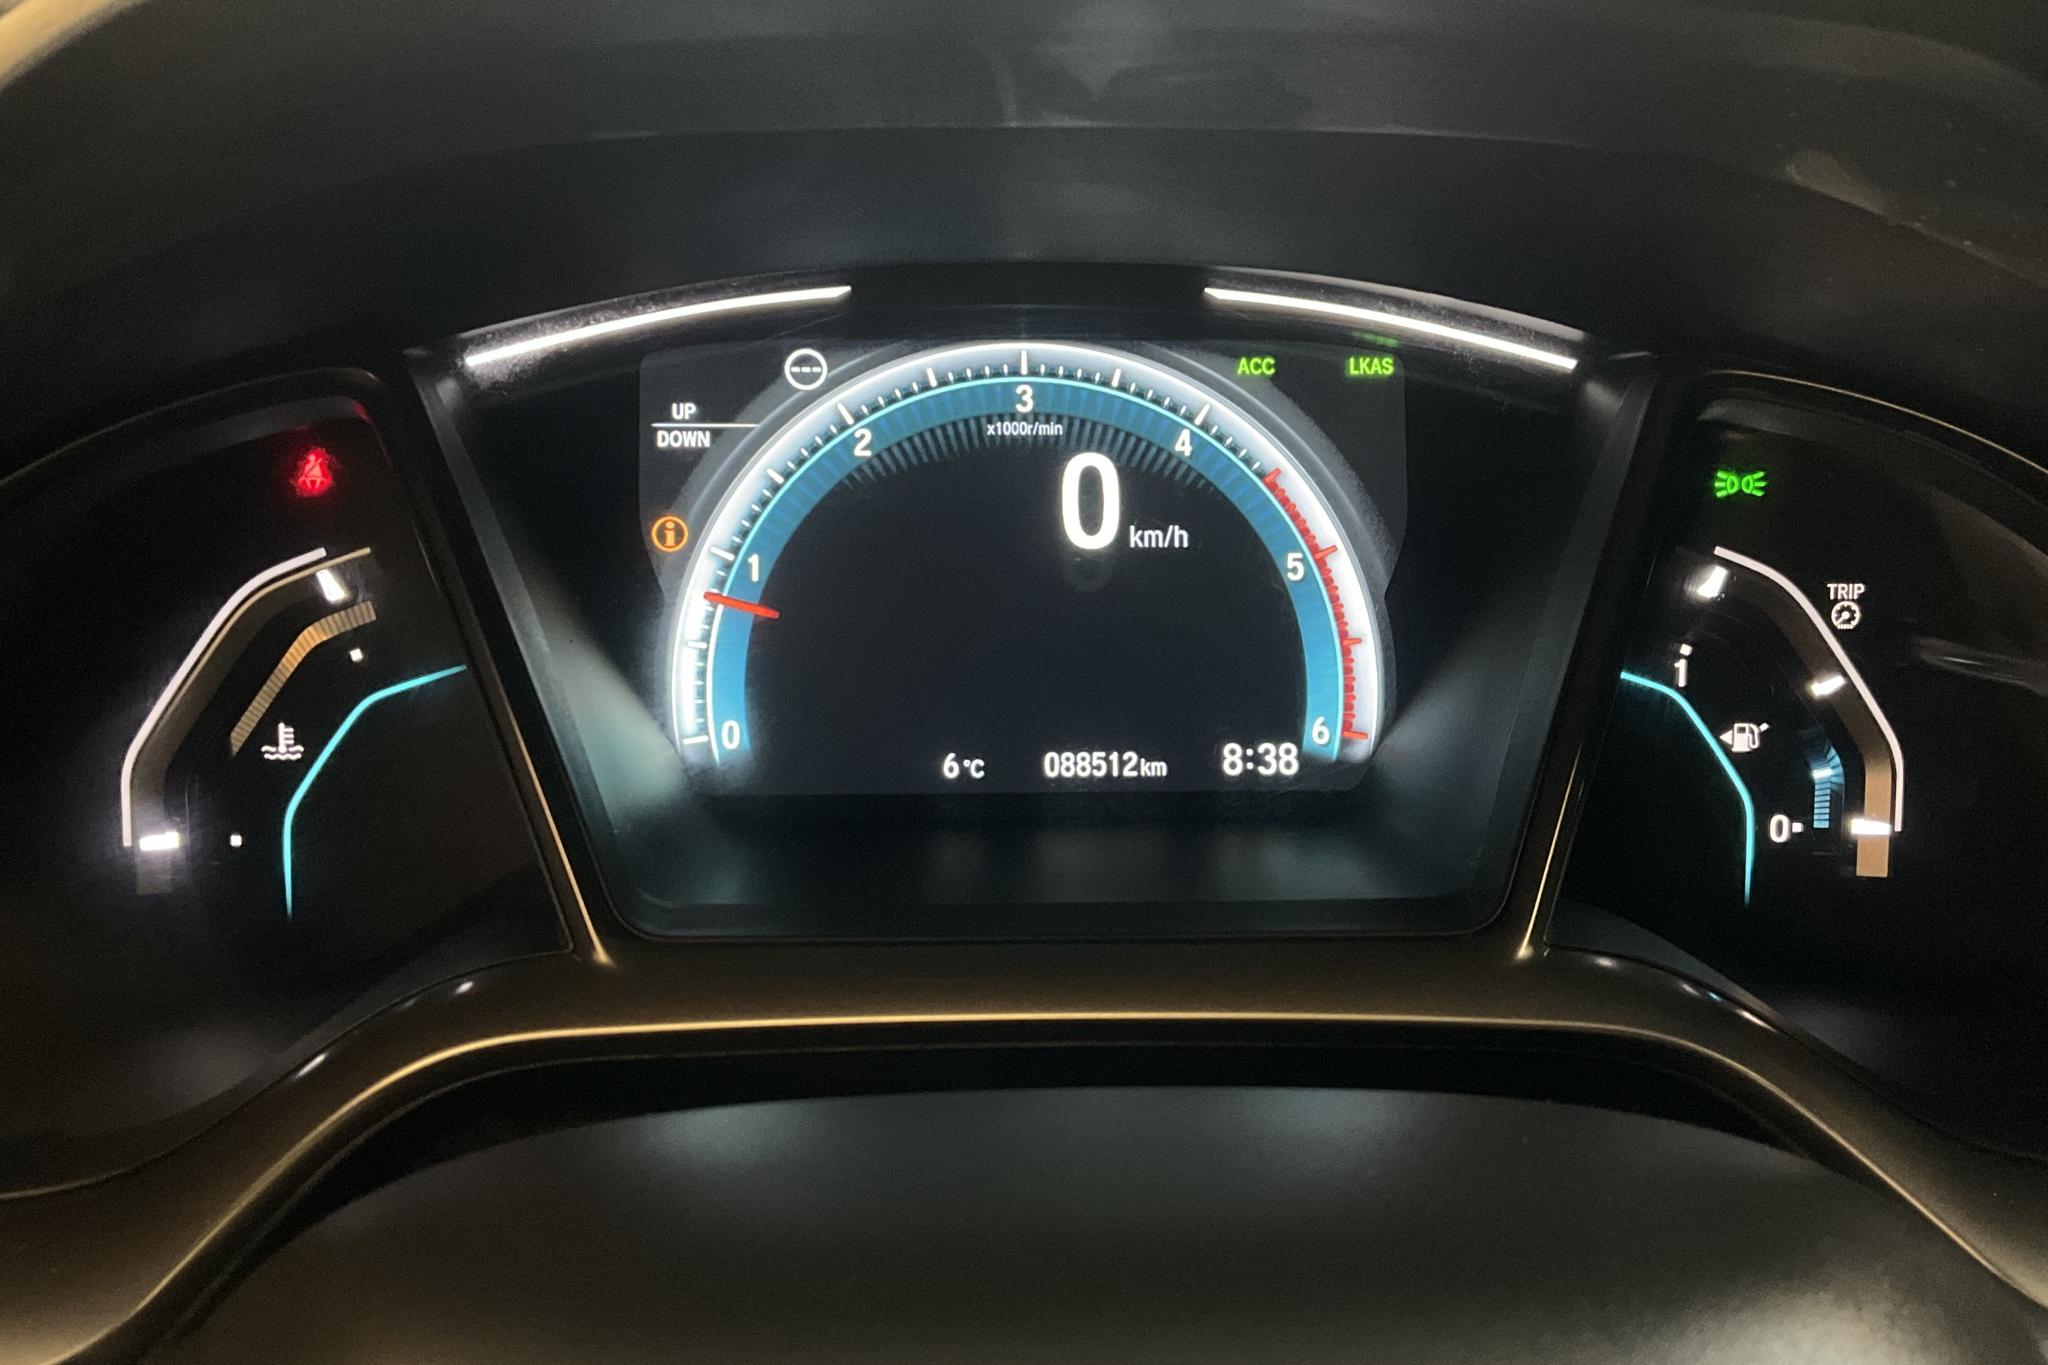 Honda Civic 1.6 i-DTEC 5dr (120hk) - 8 851 mil - Manuell - Dark Grey - 2018